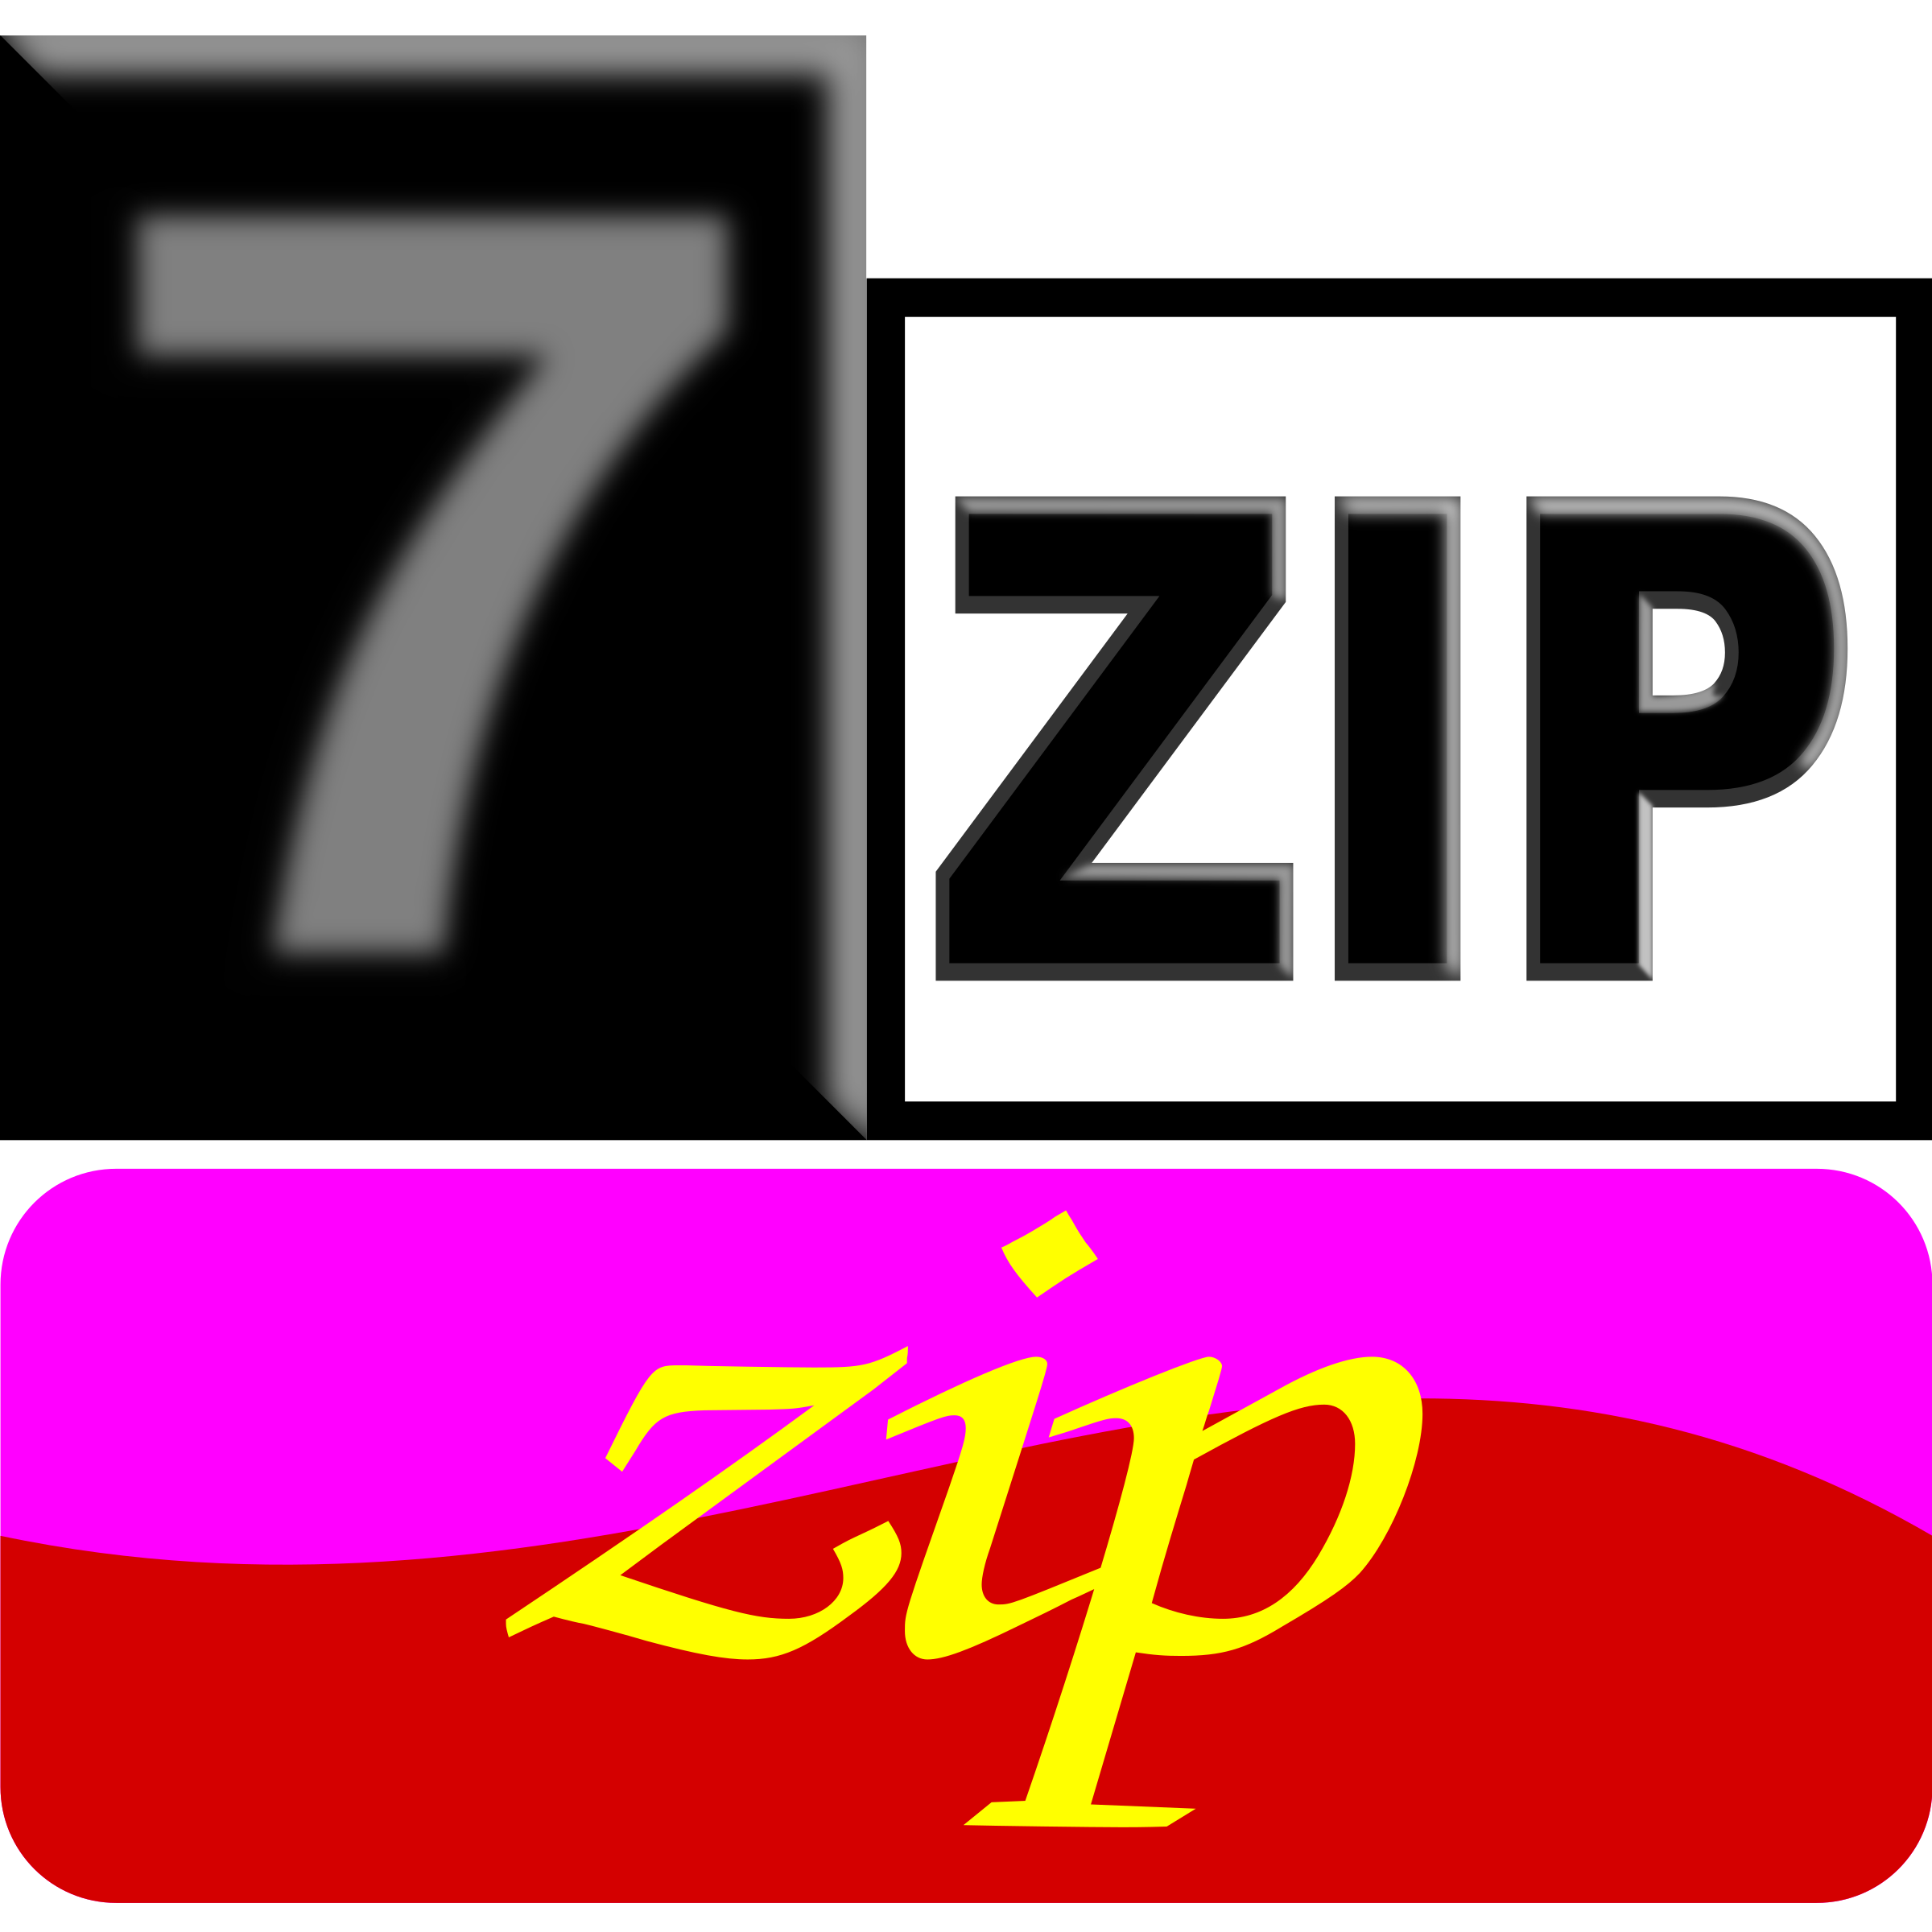 7zip Classic zip SVG Clip arts